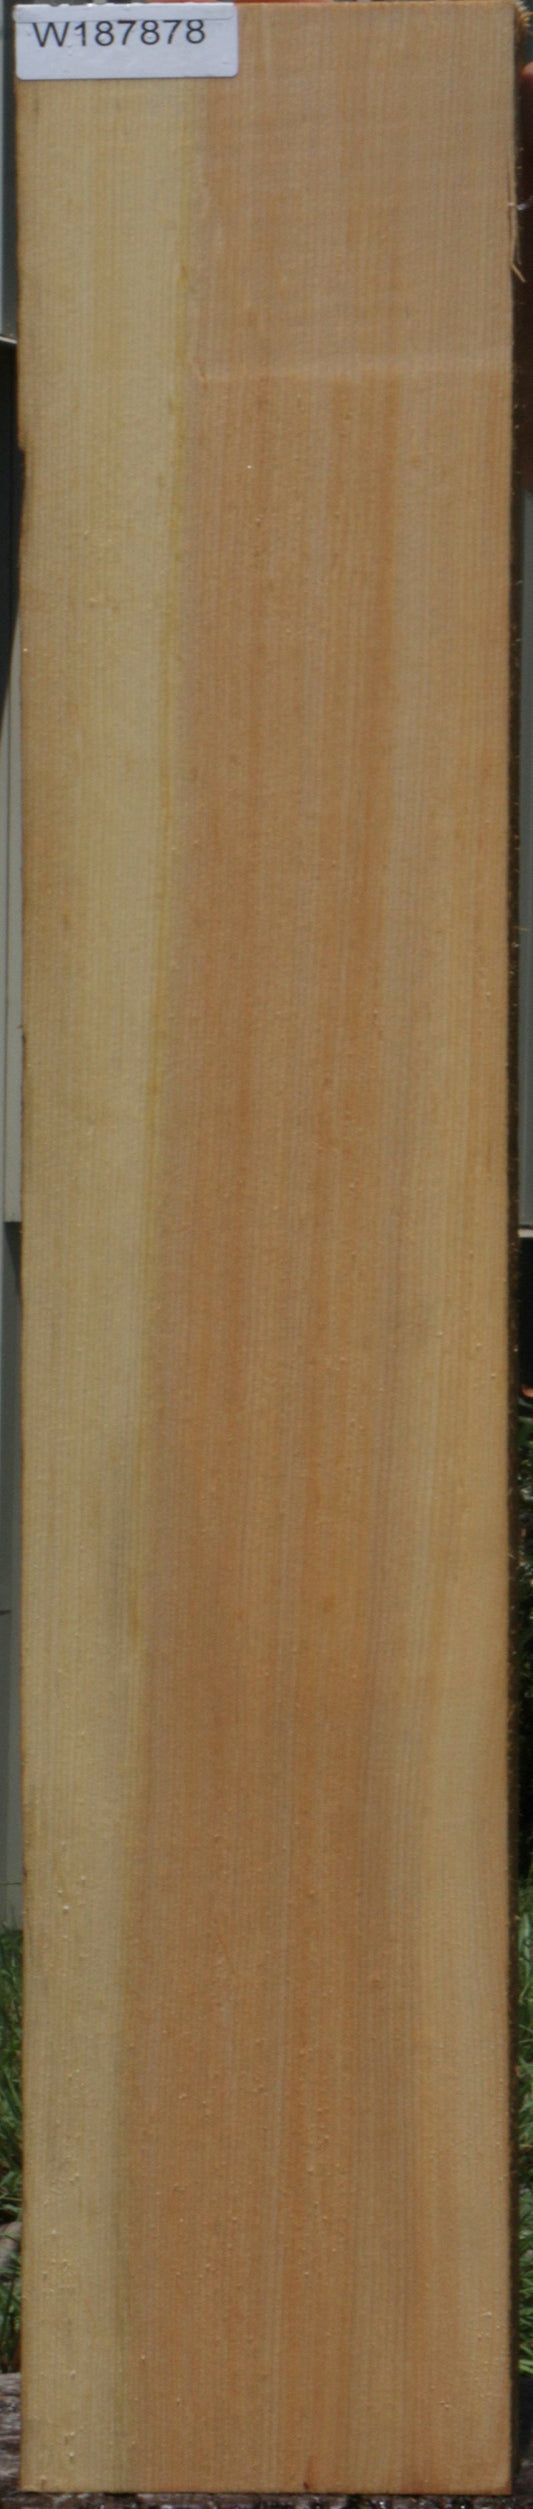 Sitka Spruce Instrument Lumber